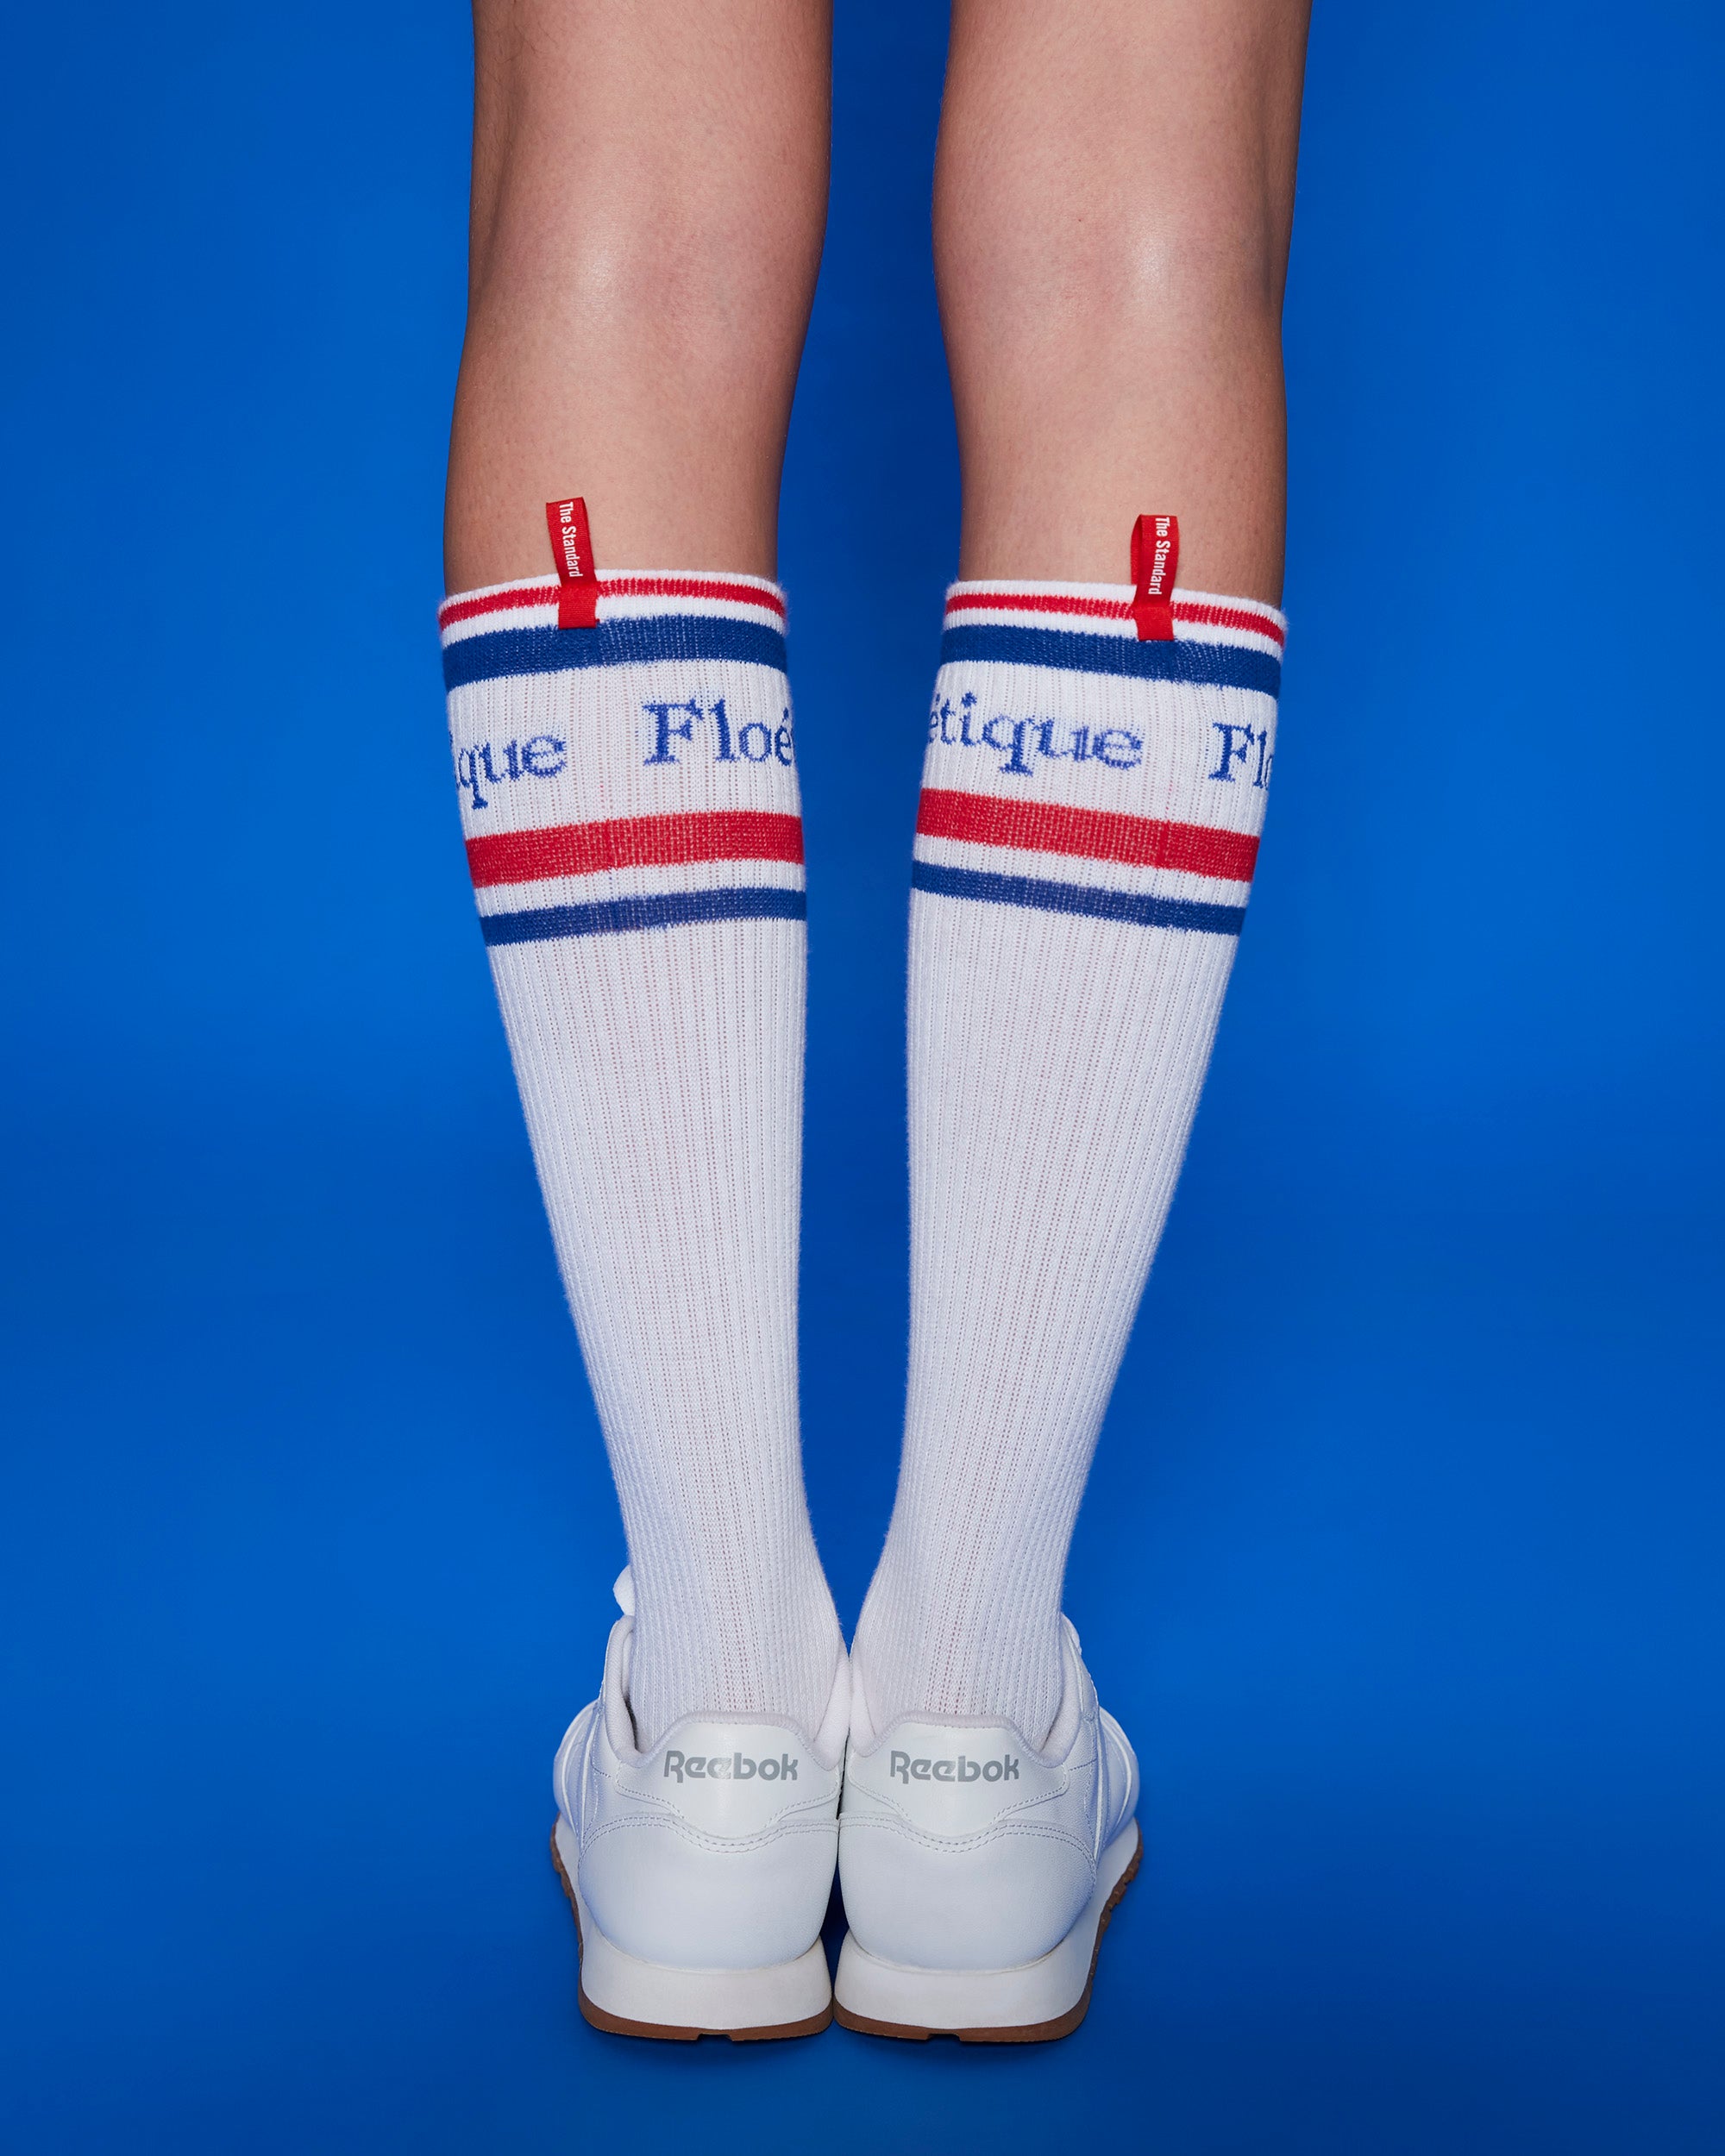 The Standard x Floetique Knee High Socks - Shop The Standard